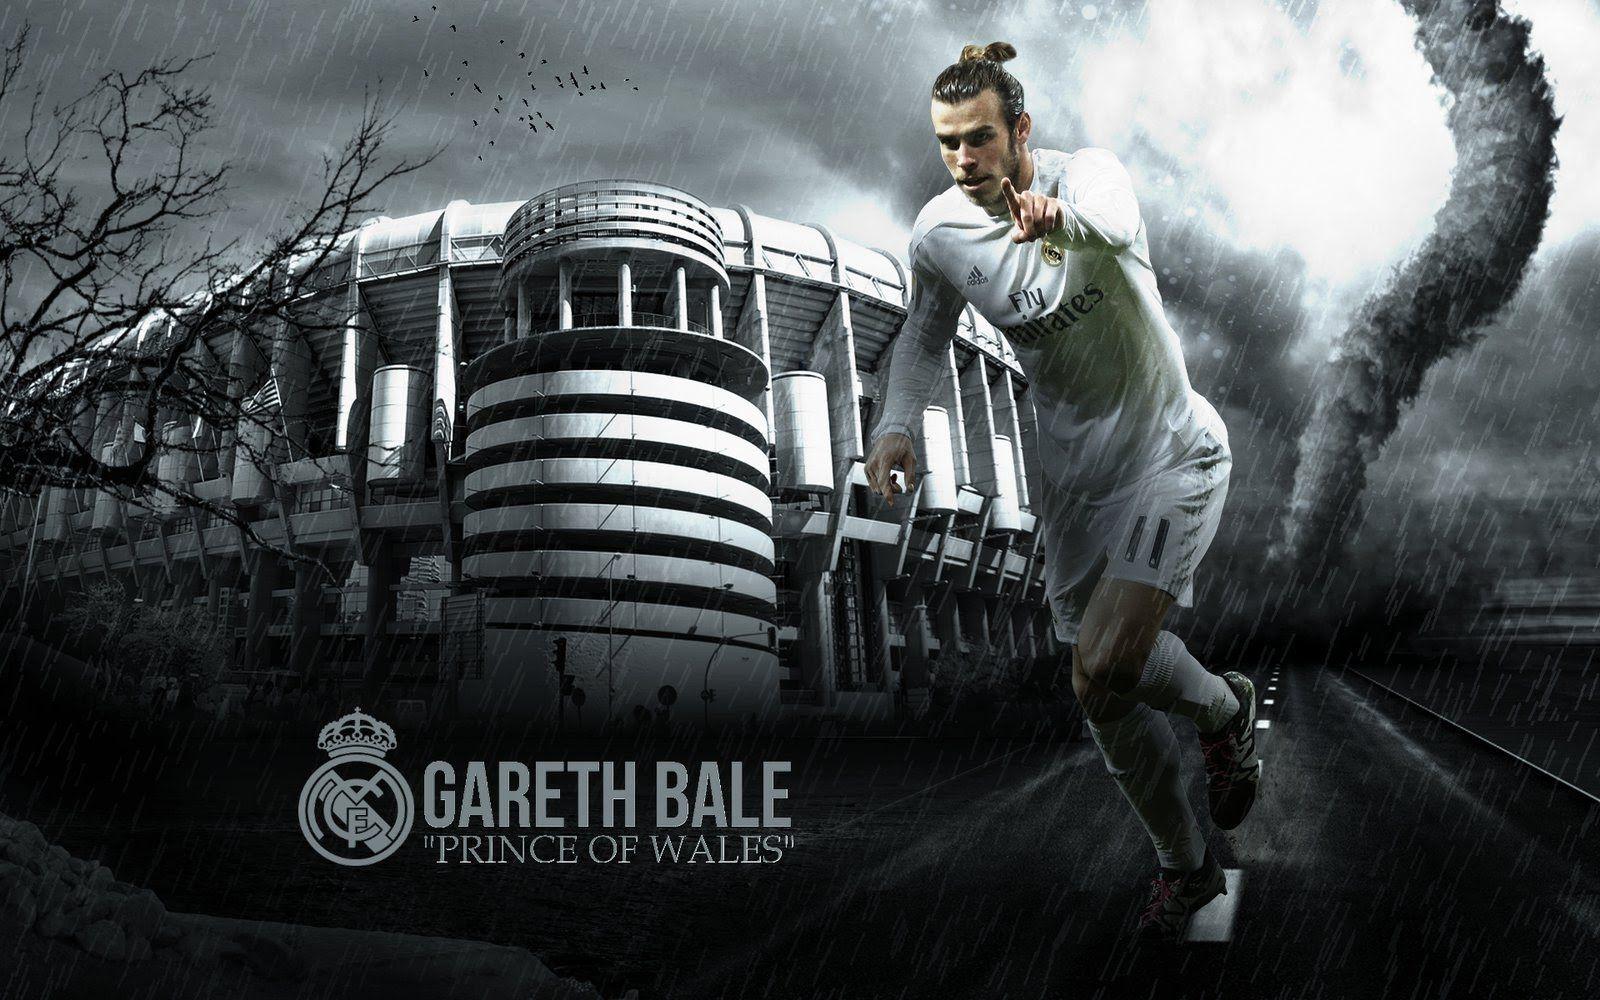 Gareth Bale Perfection ● Skills & Dribbling ● 2016